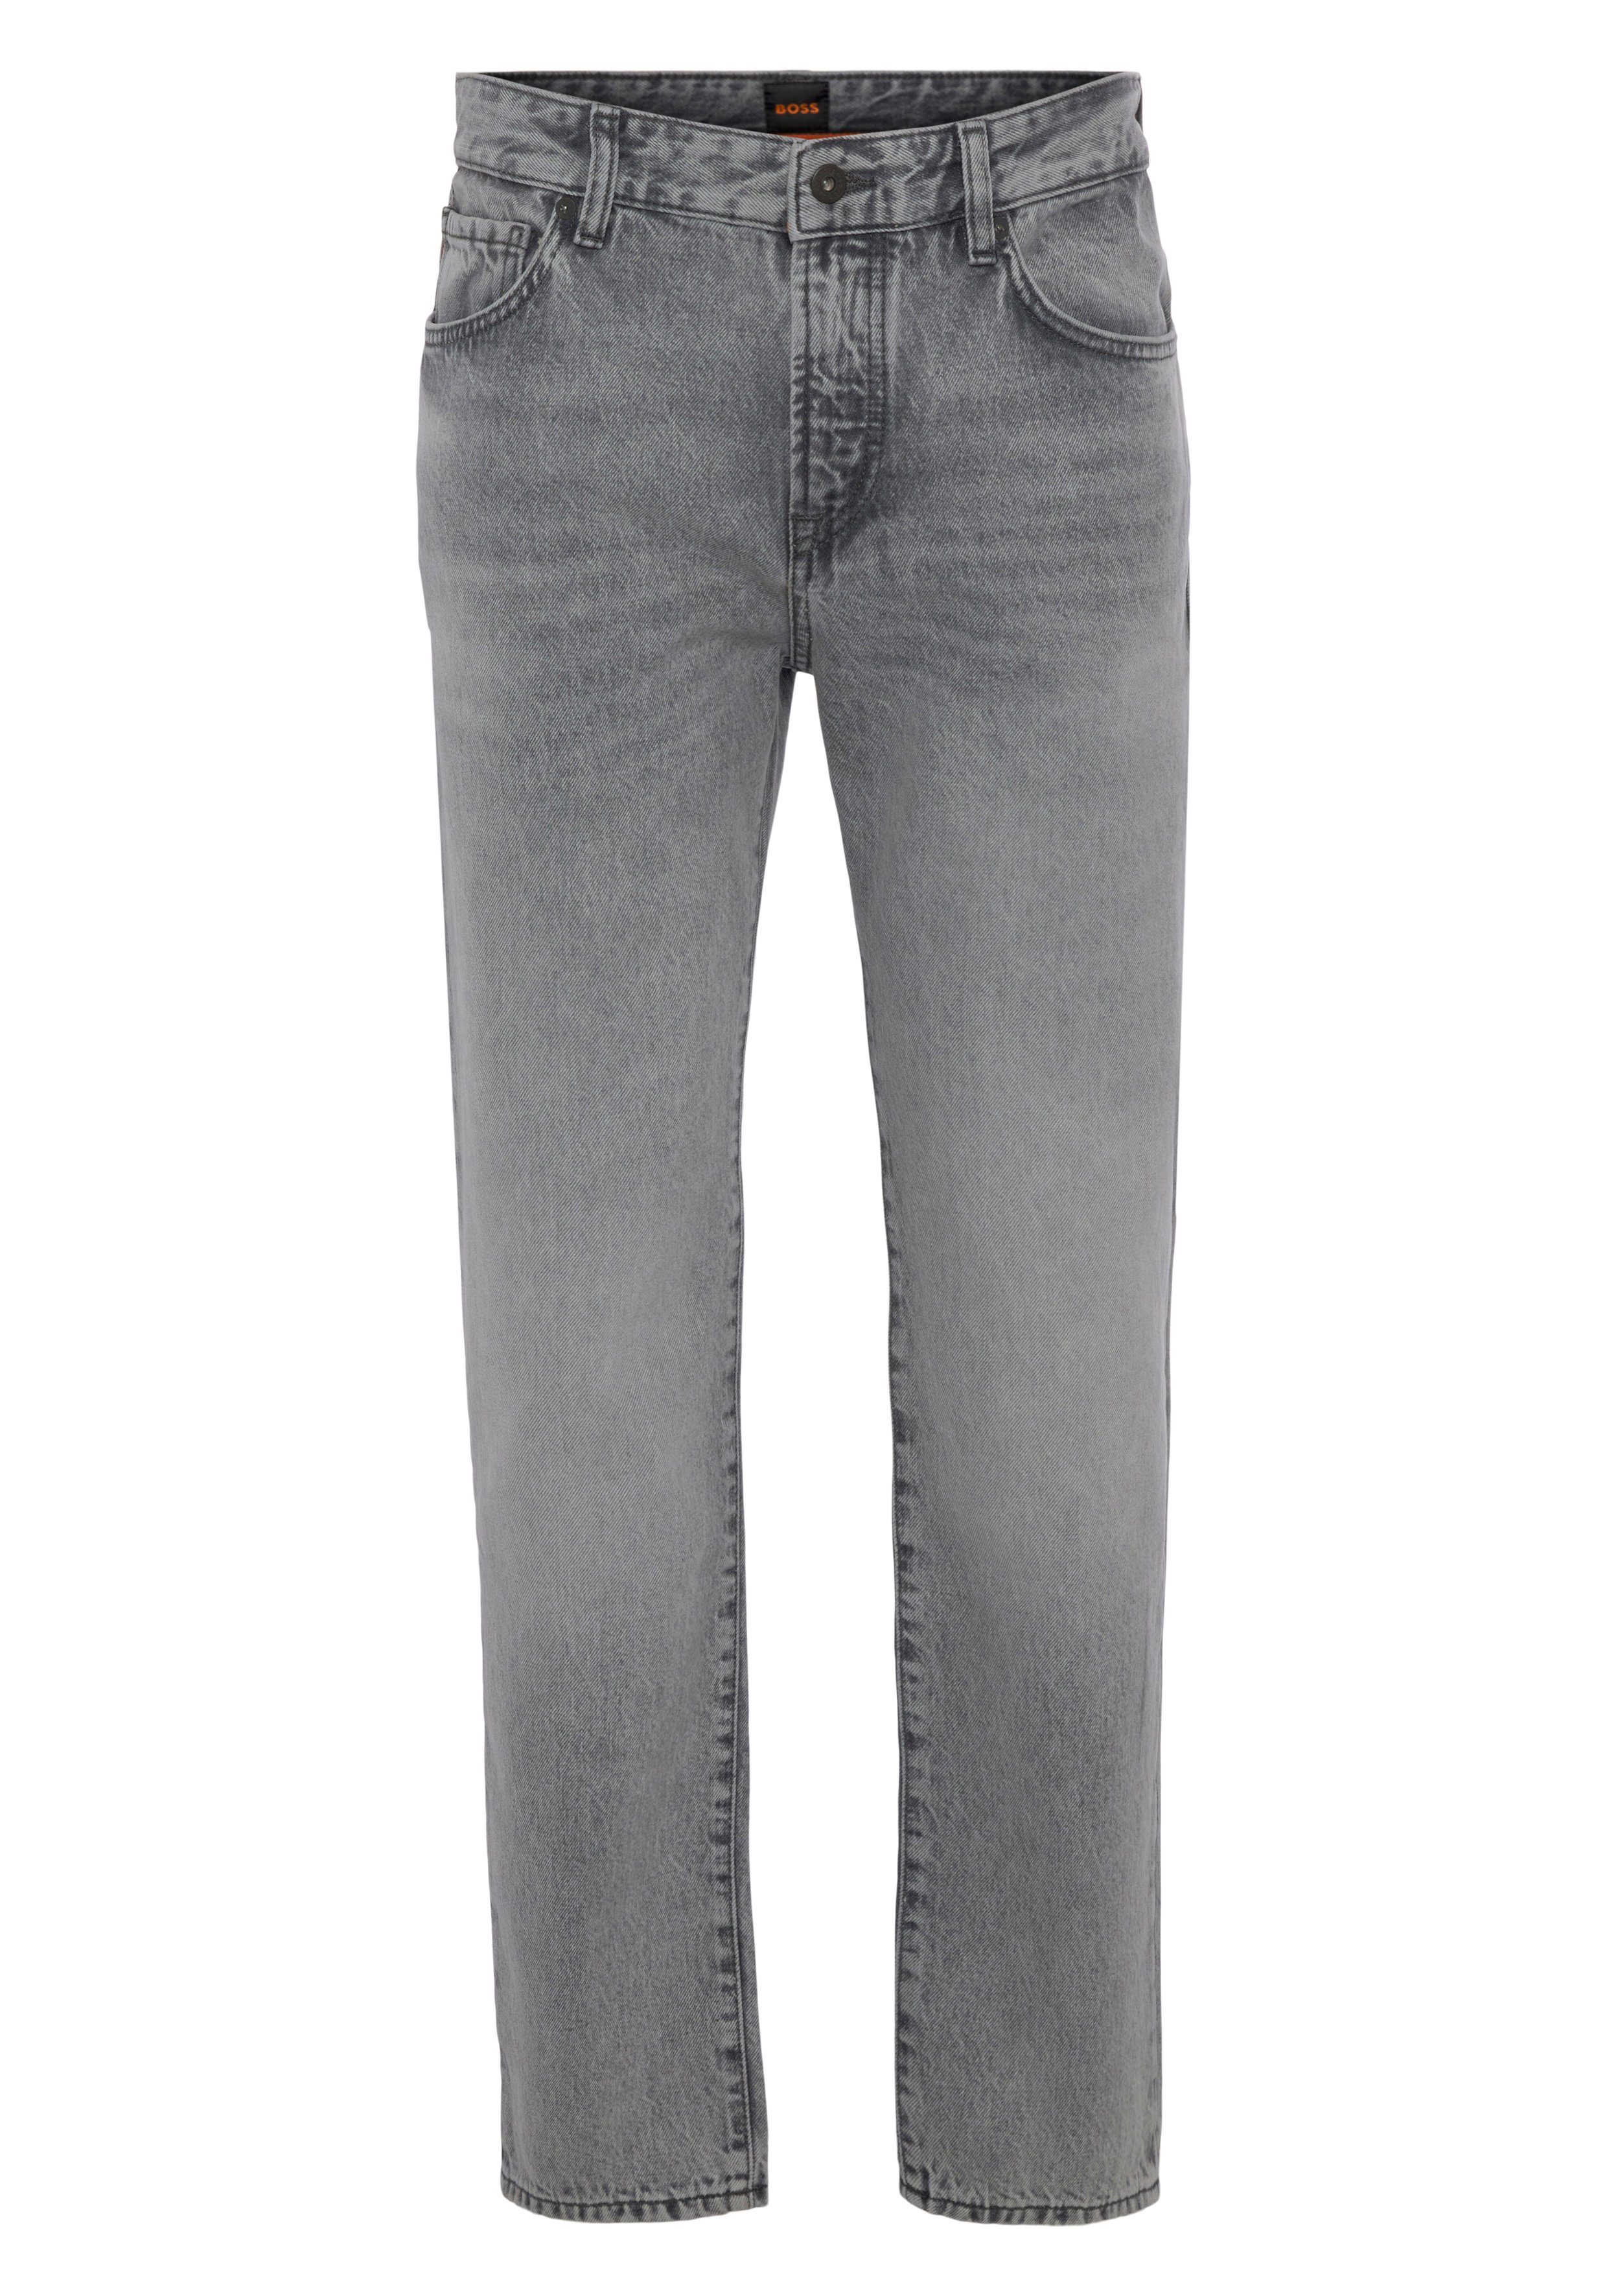 BOSS ORANGE Gerade Jeans mit Leder-Badge pastellgrau